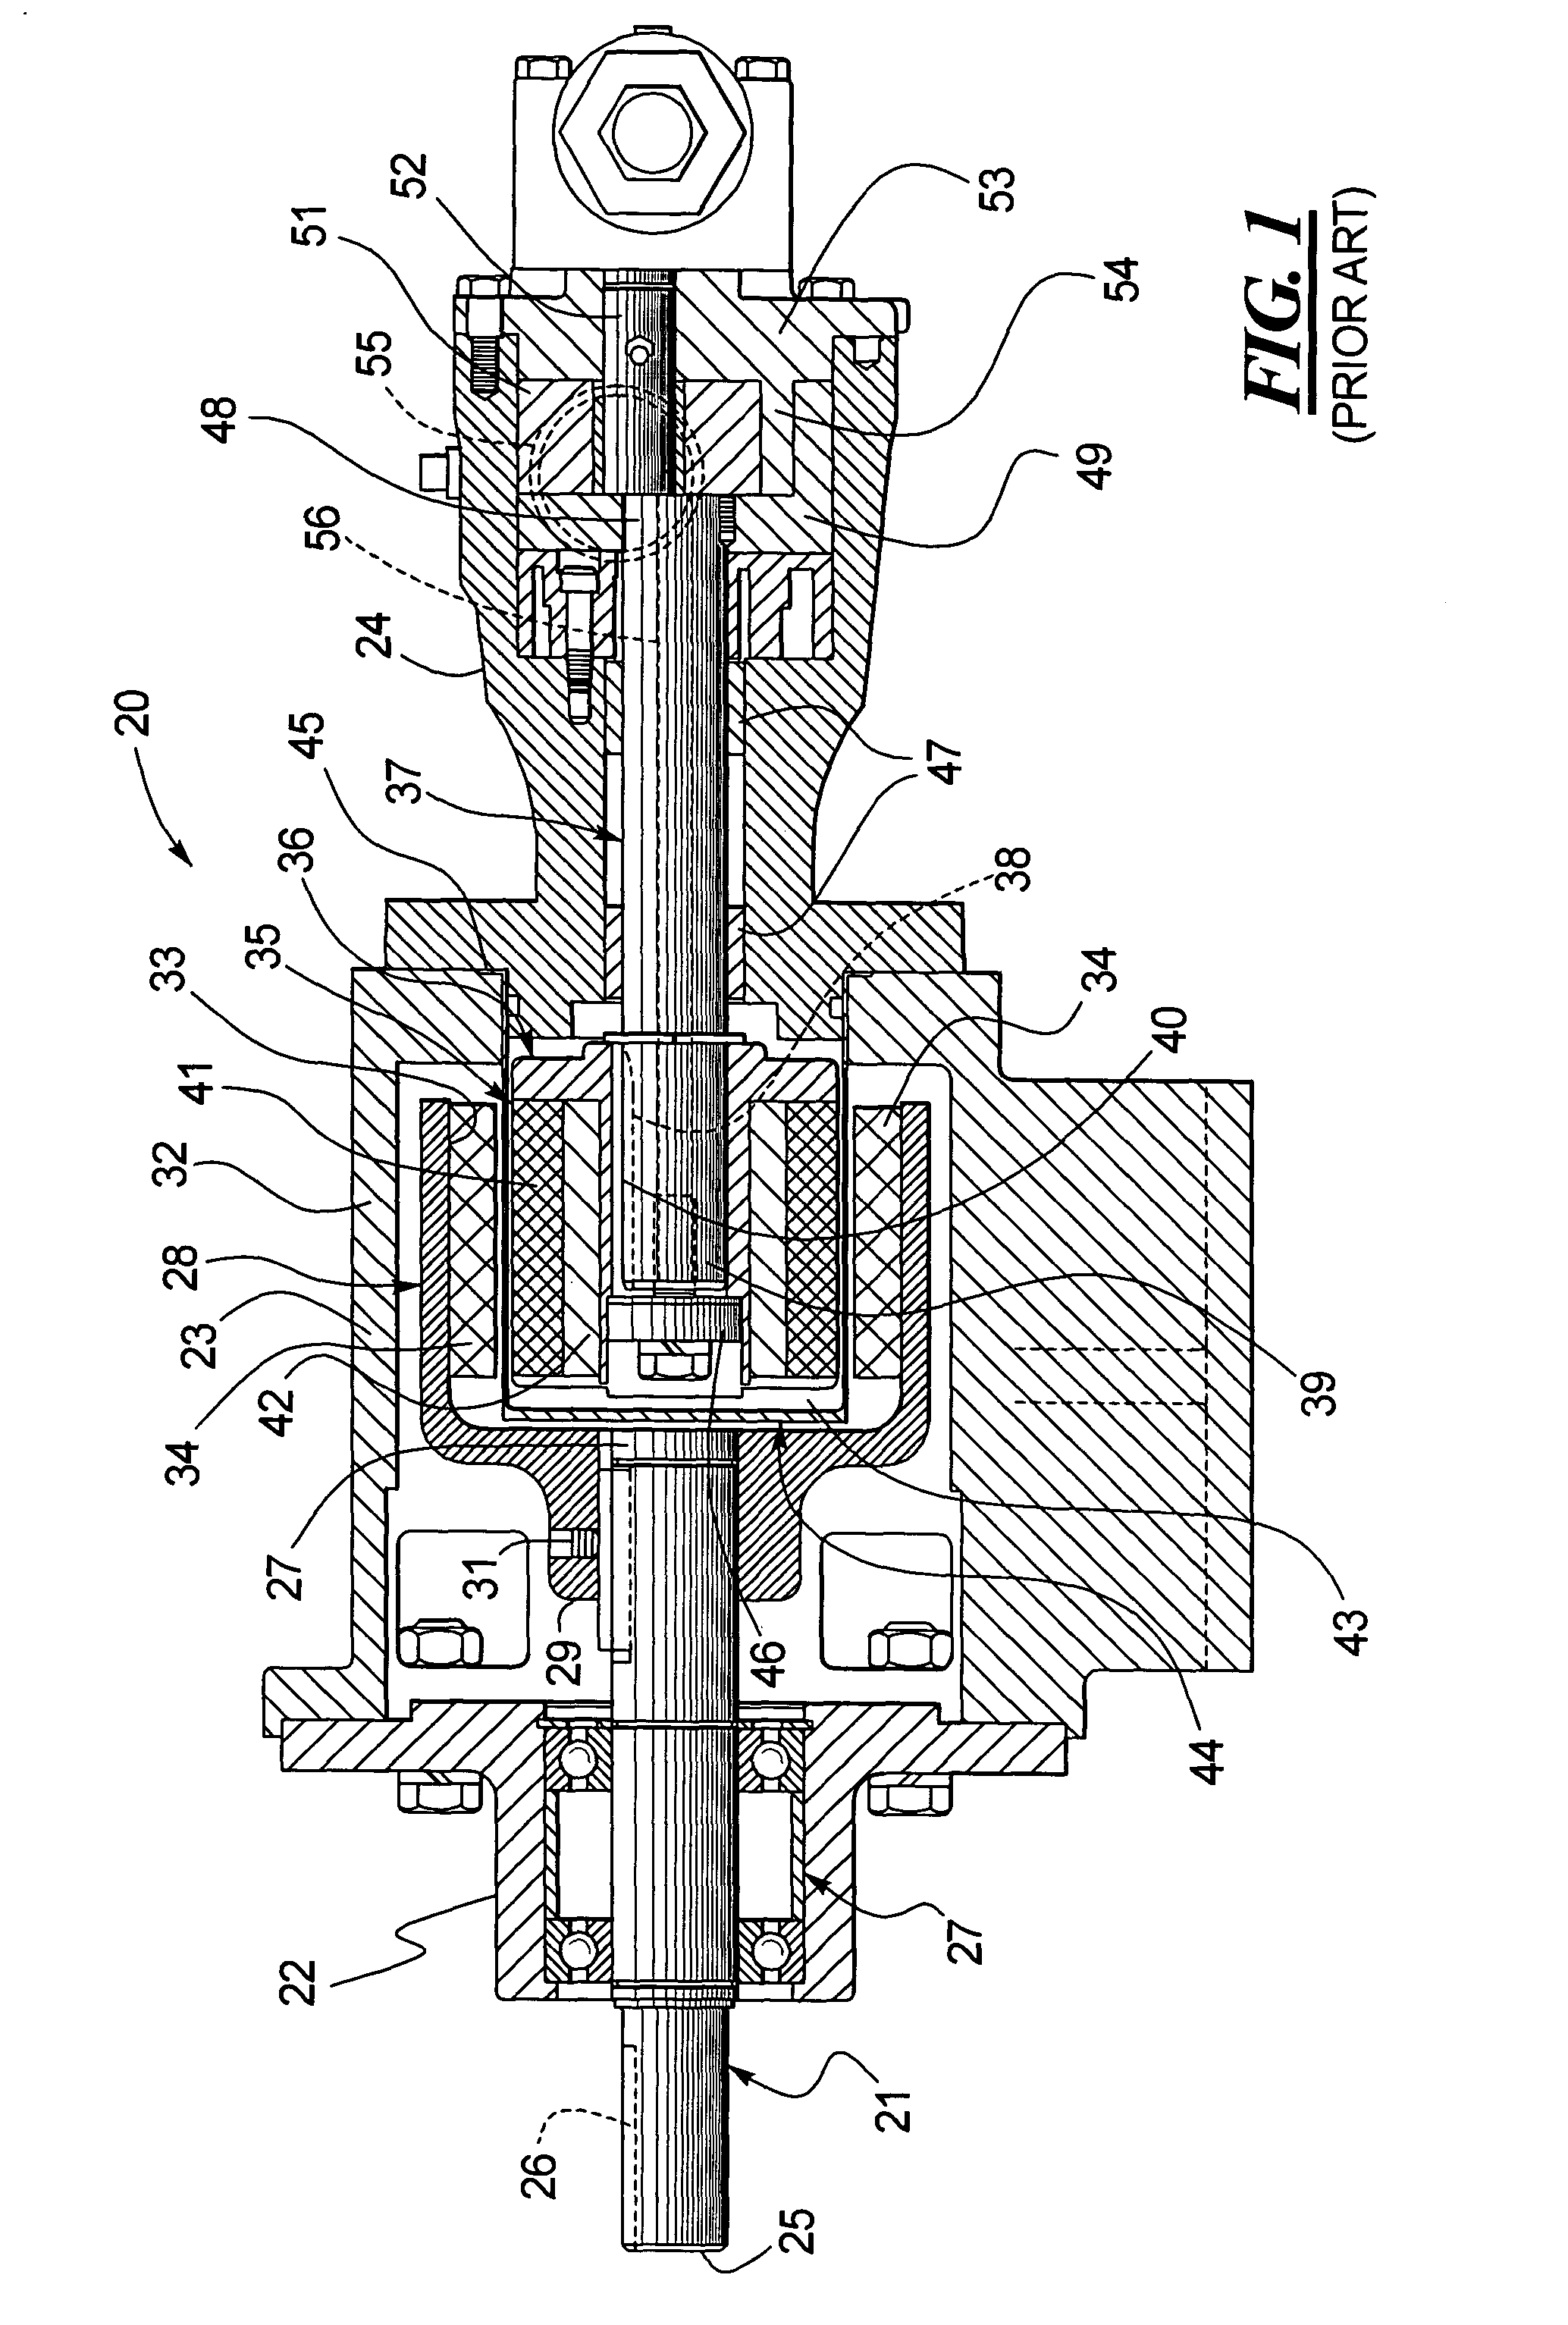 Rotor shaft bearing design and coupling mechanism